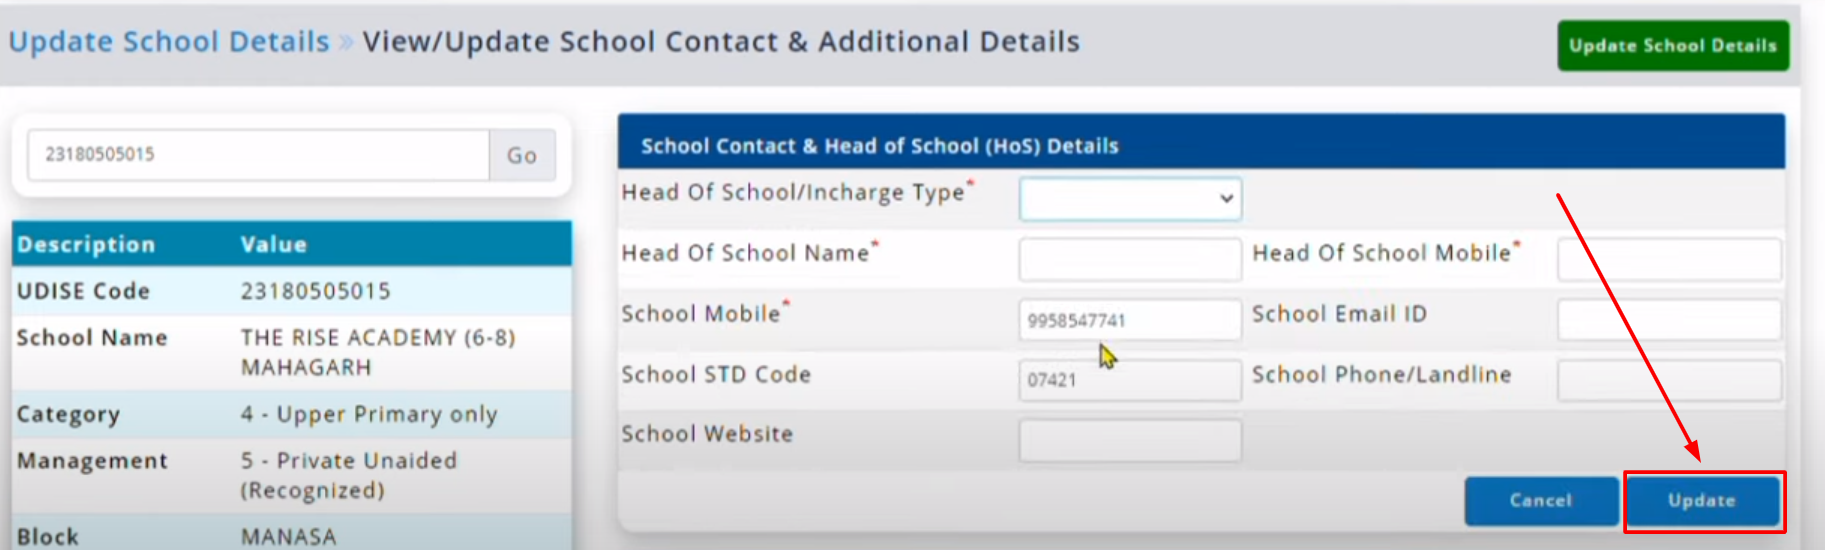 update school details on udise portal